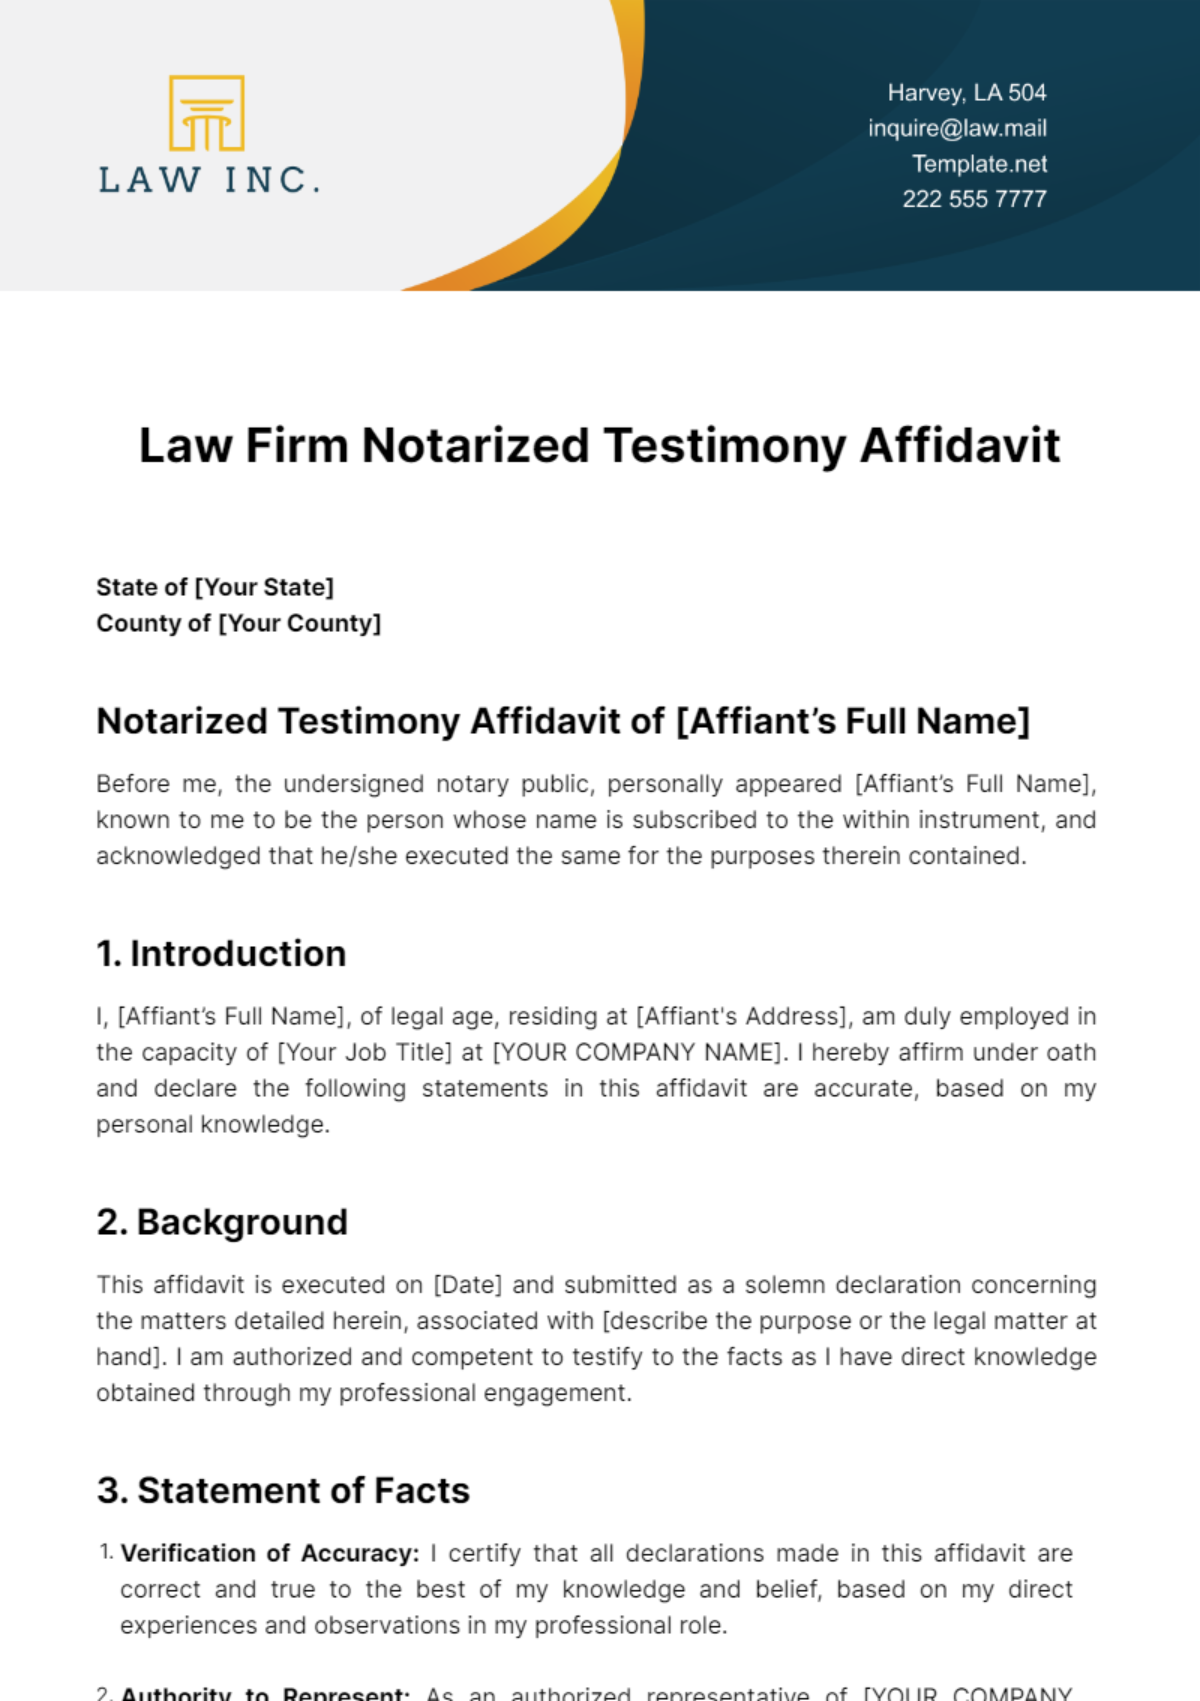 Law Firm Notarized Testimony Affidavit Template